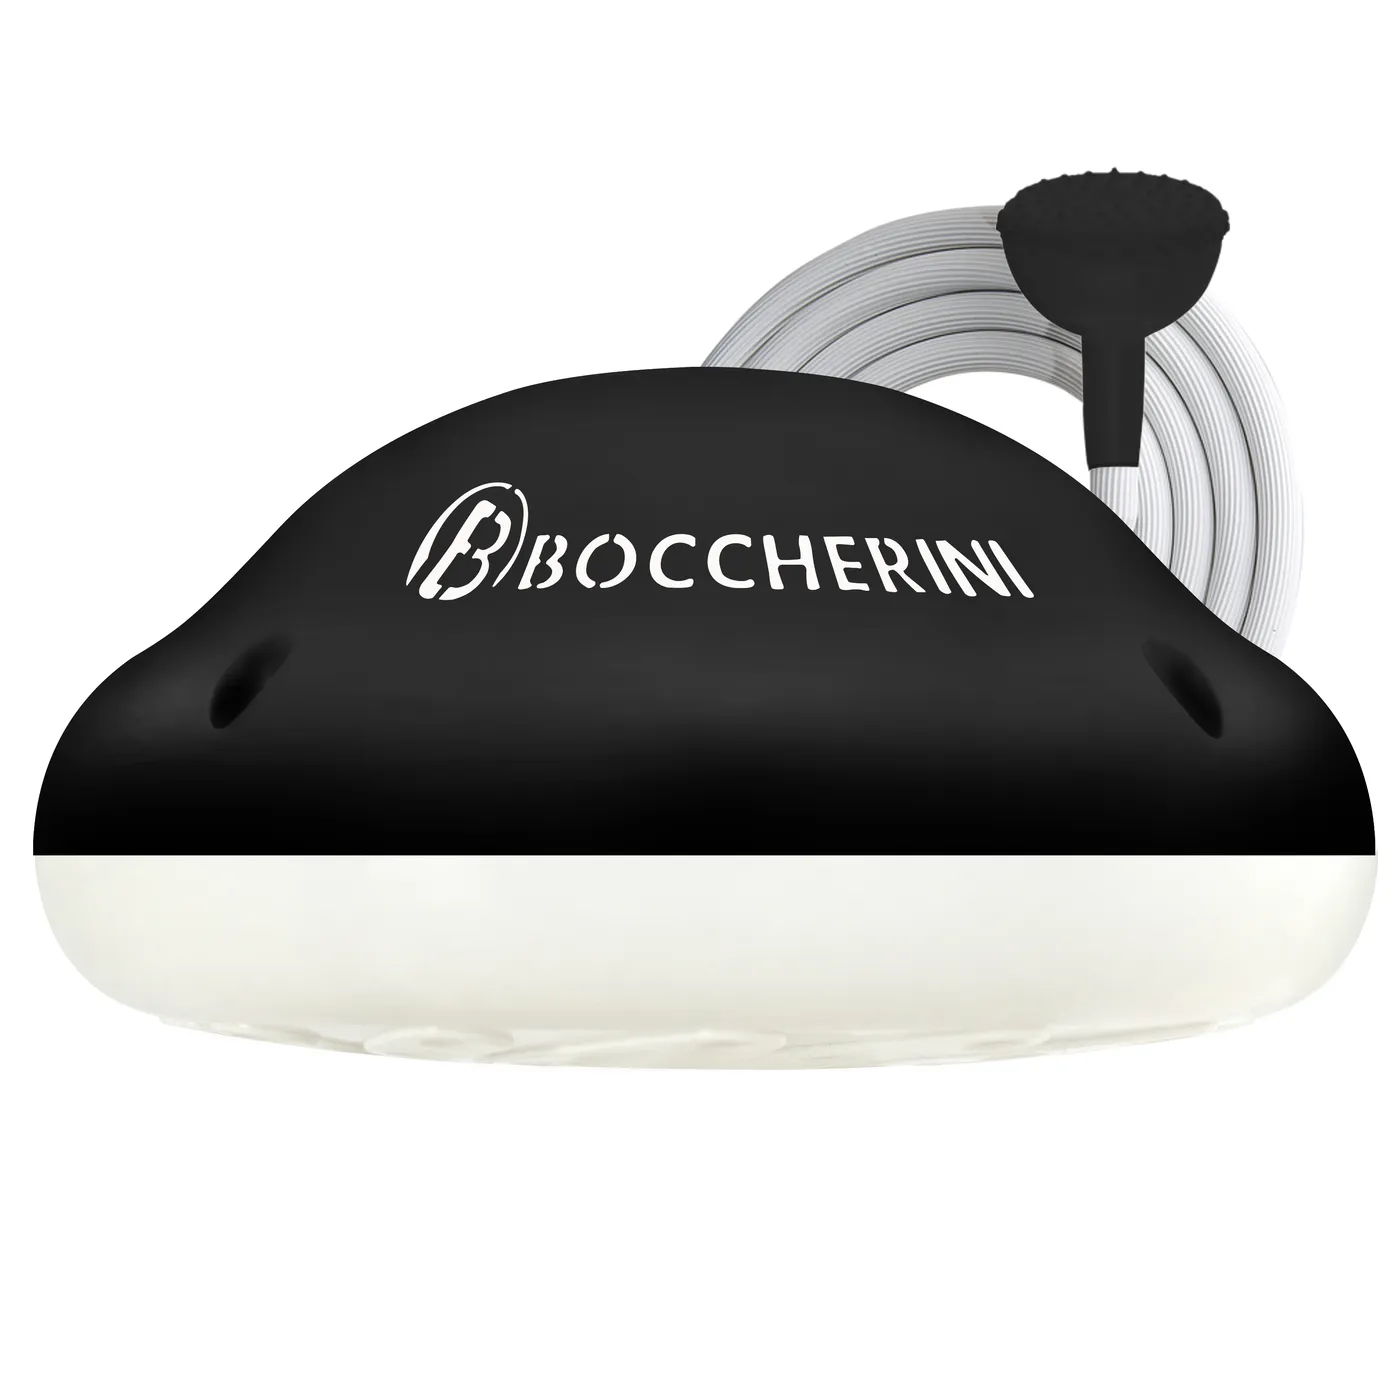 Ducha Electrica BOCCHERINI Premium Zent Blanca-Negra 120V con Manguera